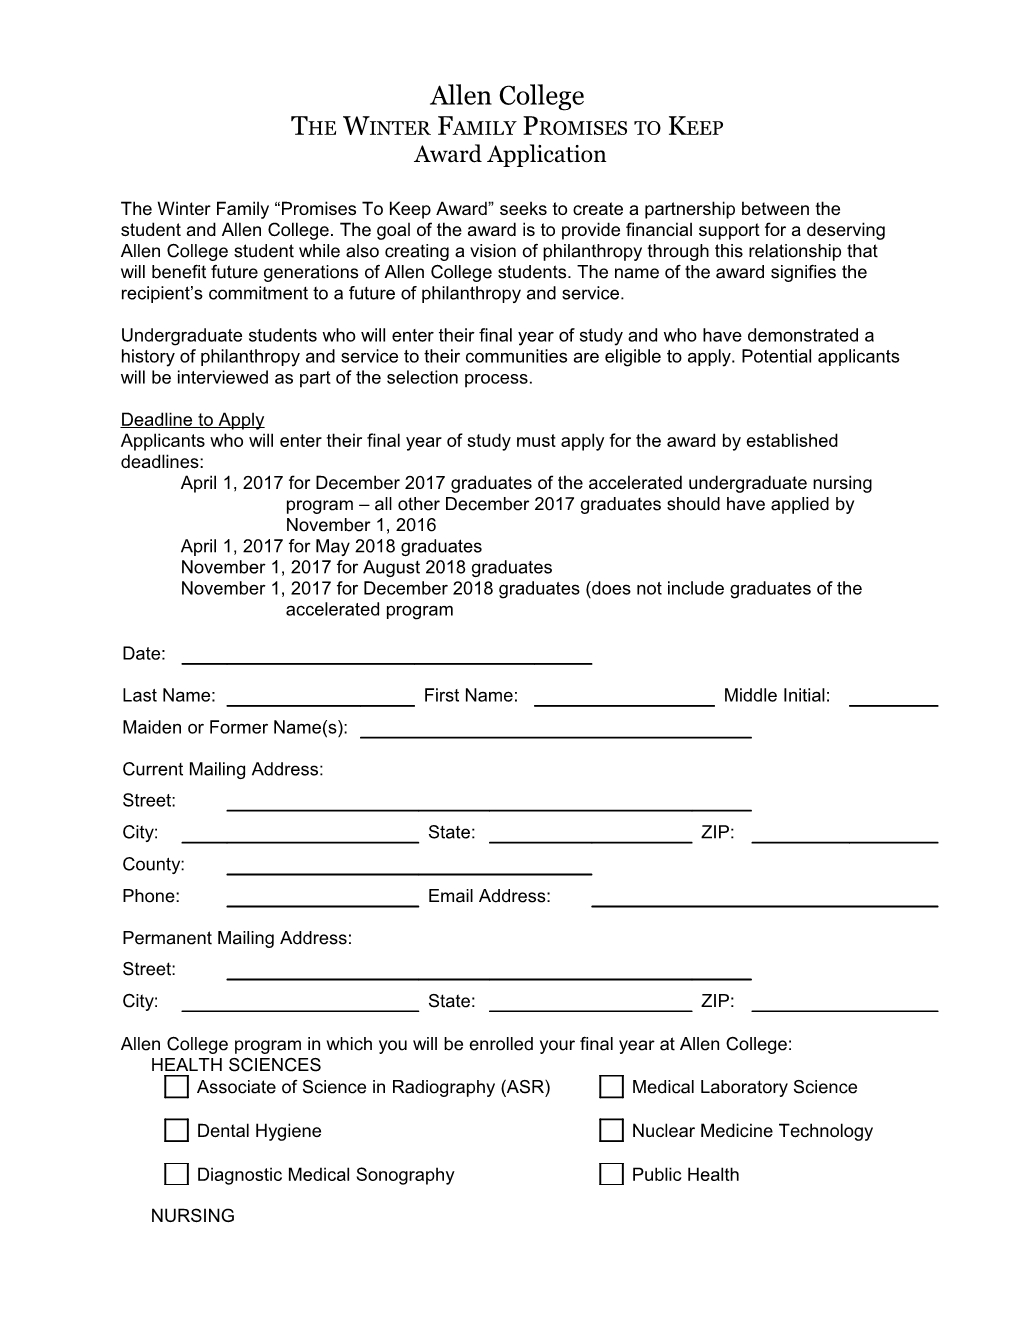 Allen College Institutional Scholarship Application